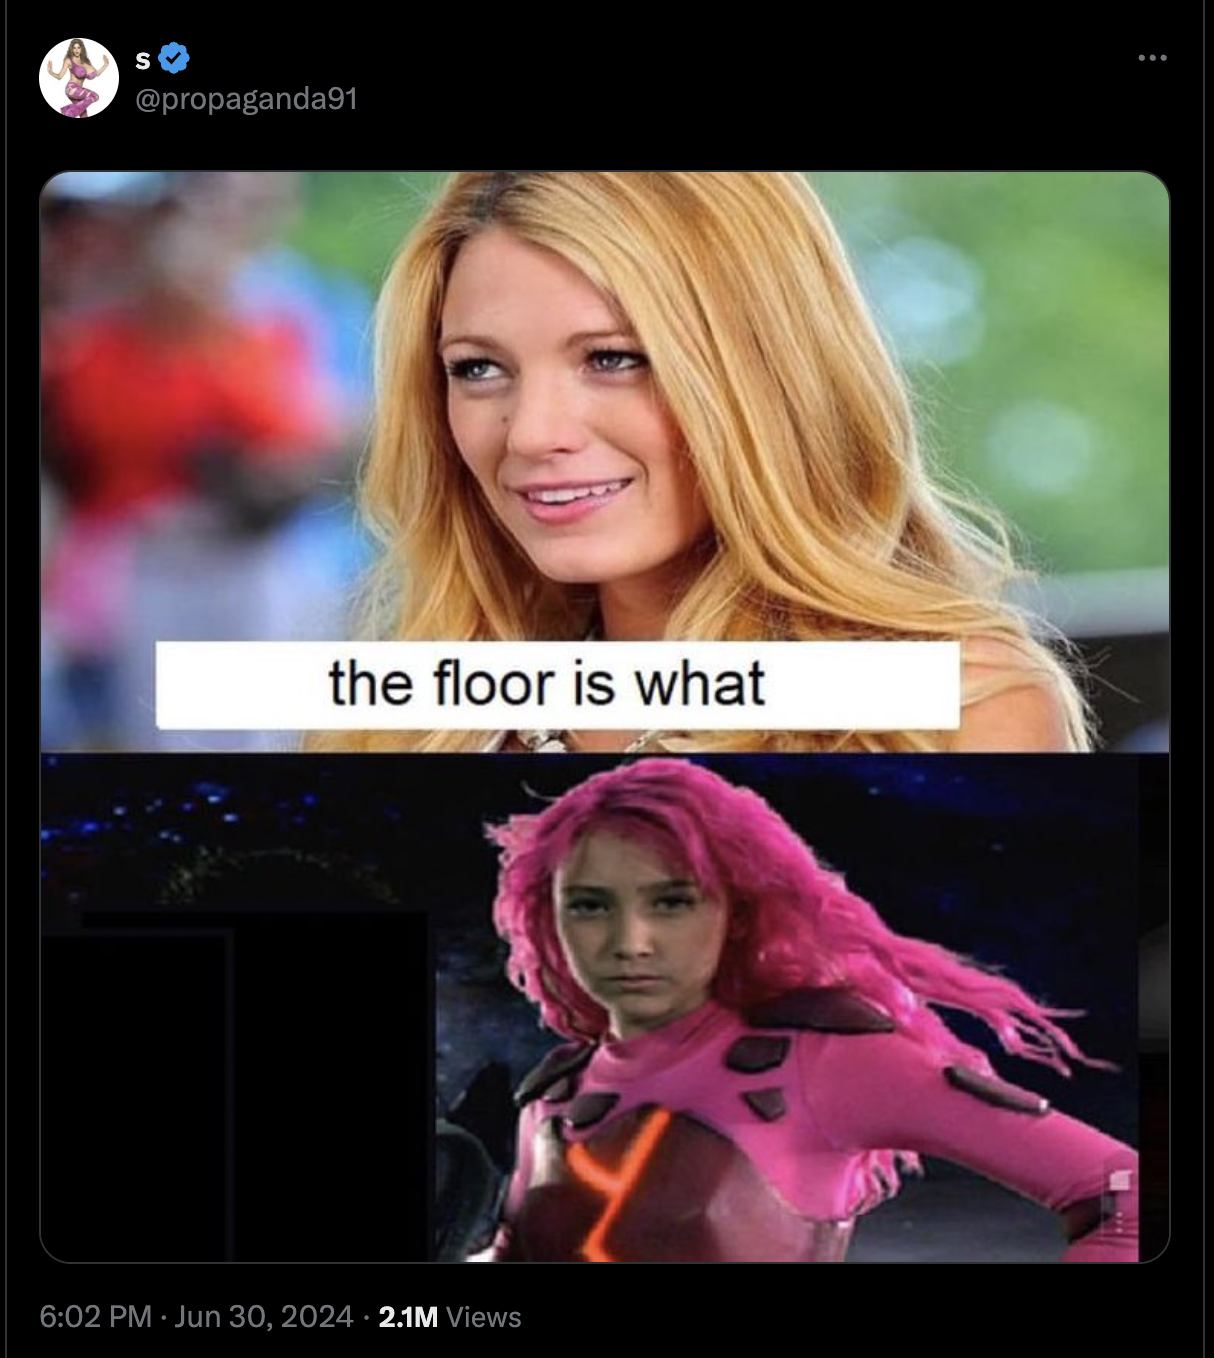 gossip girl meme - S the floor is what 2.1M Views